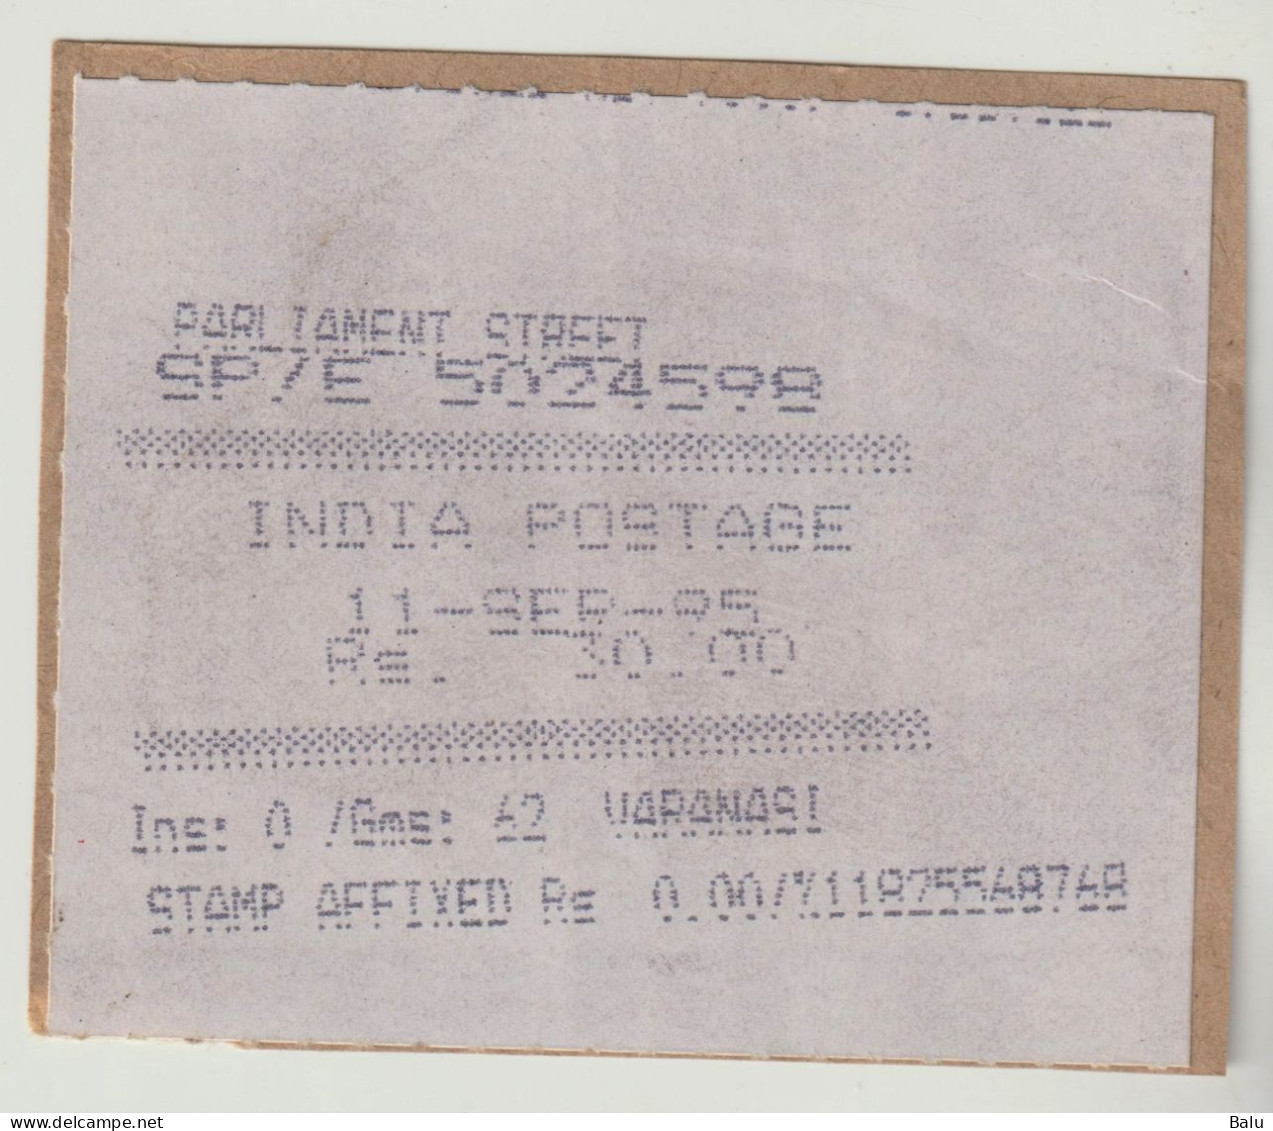 Indien India Postage Rs. 30.00 11-SEP-95 Parliament Street Varanasi "STAMP AFFIXED Rs" Auf Fragment - Oblitérés